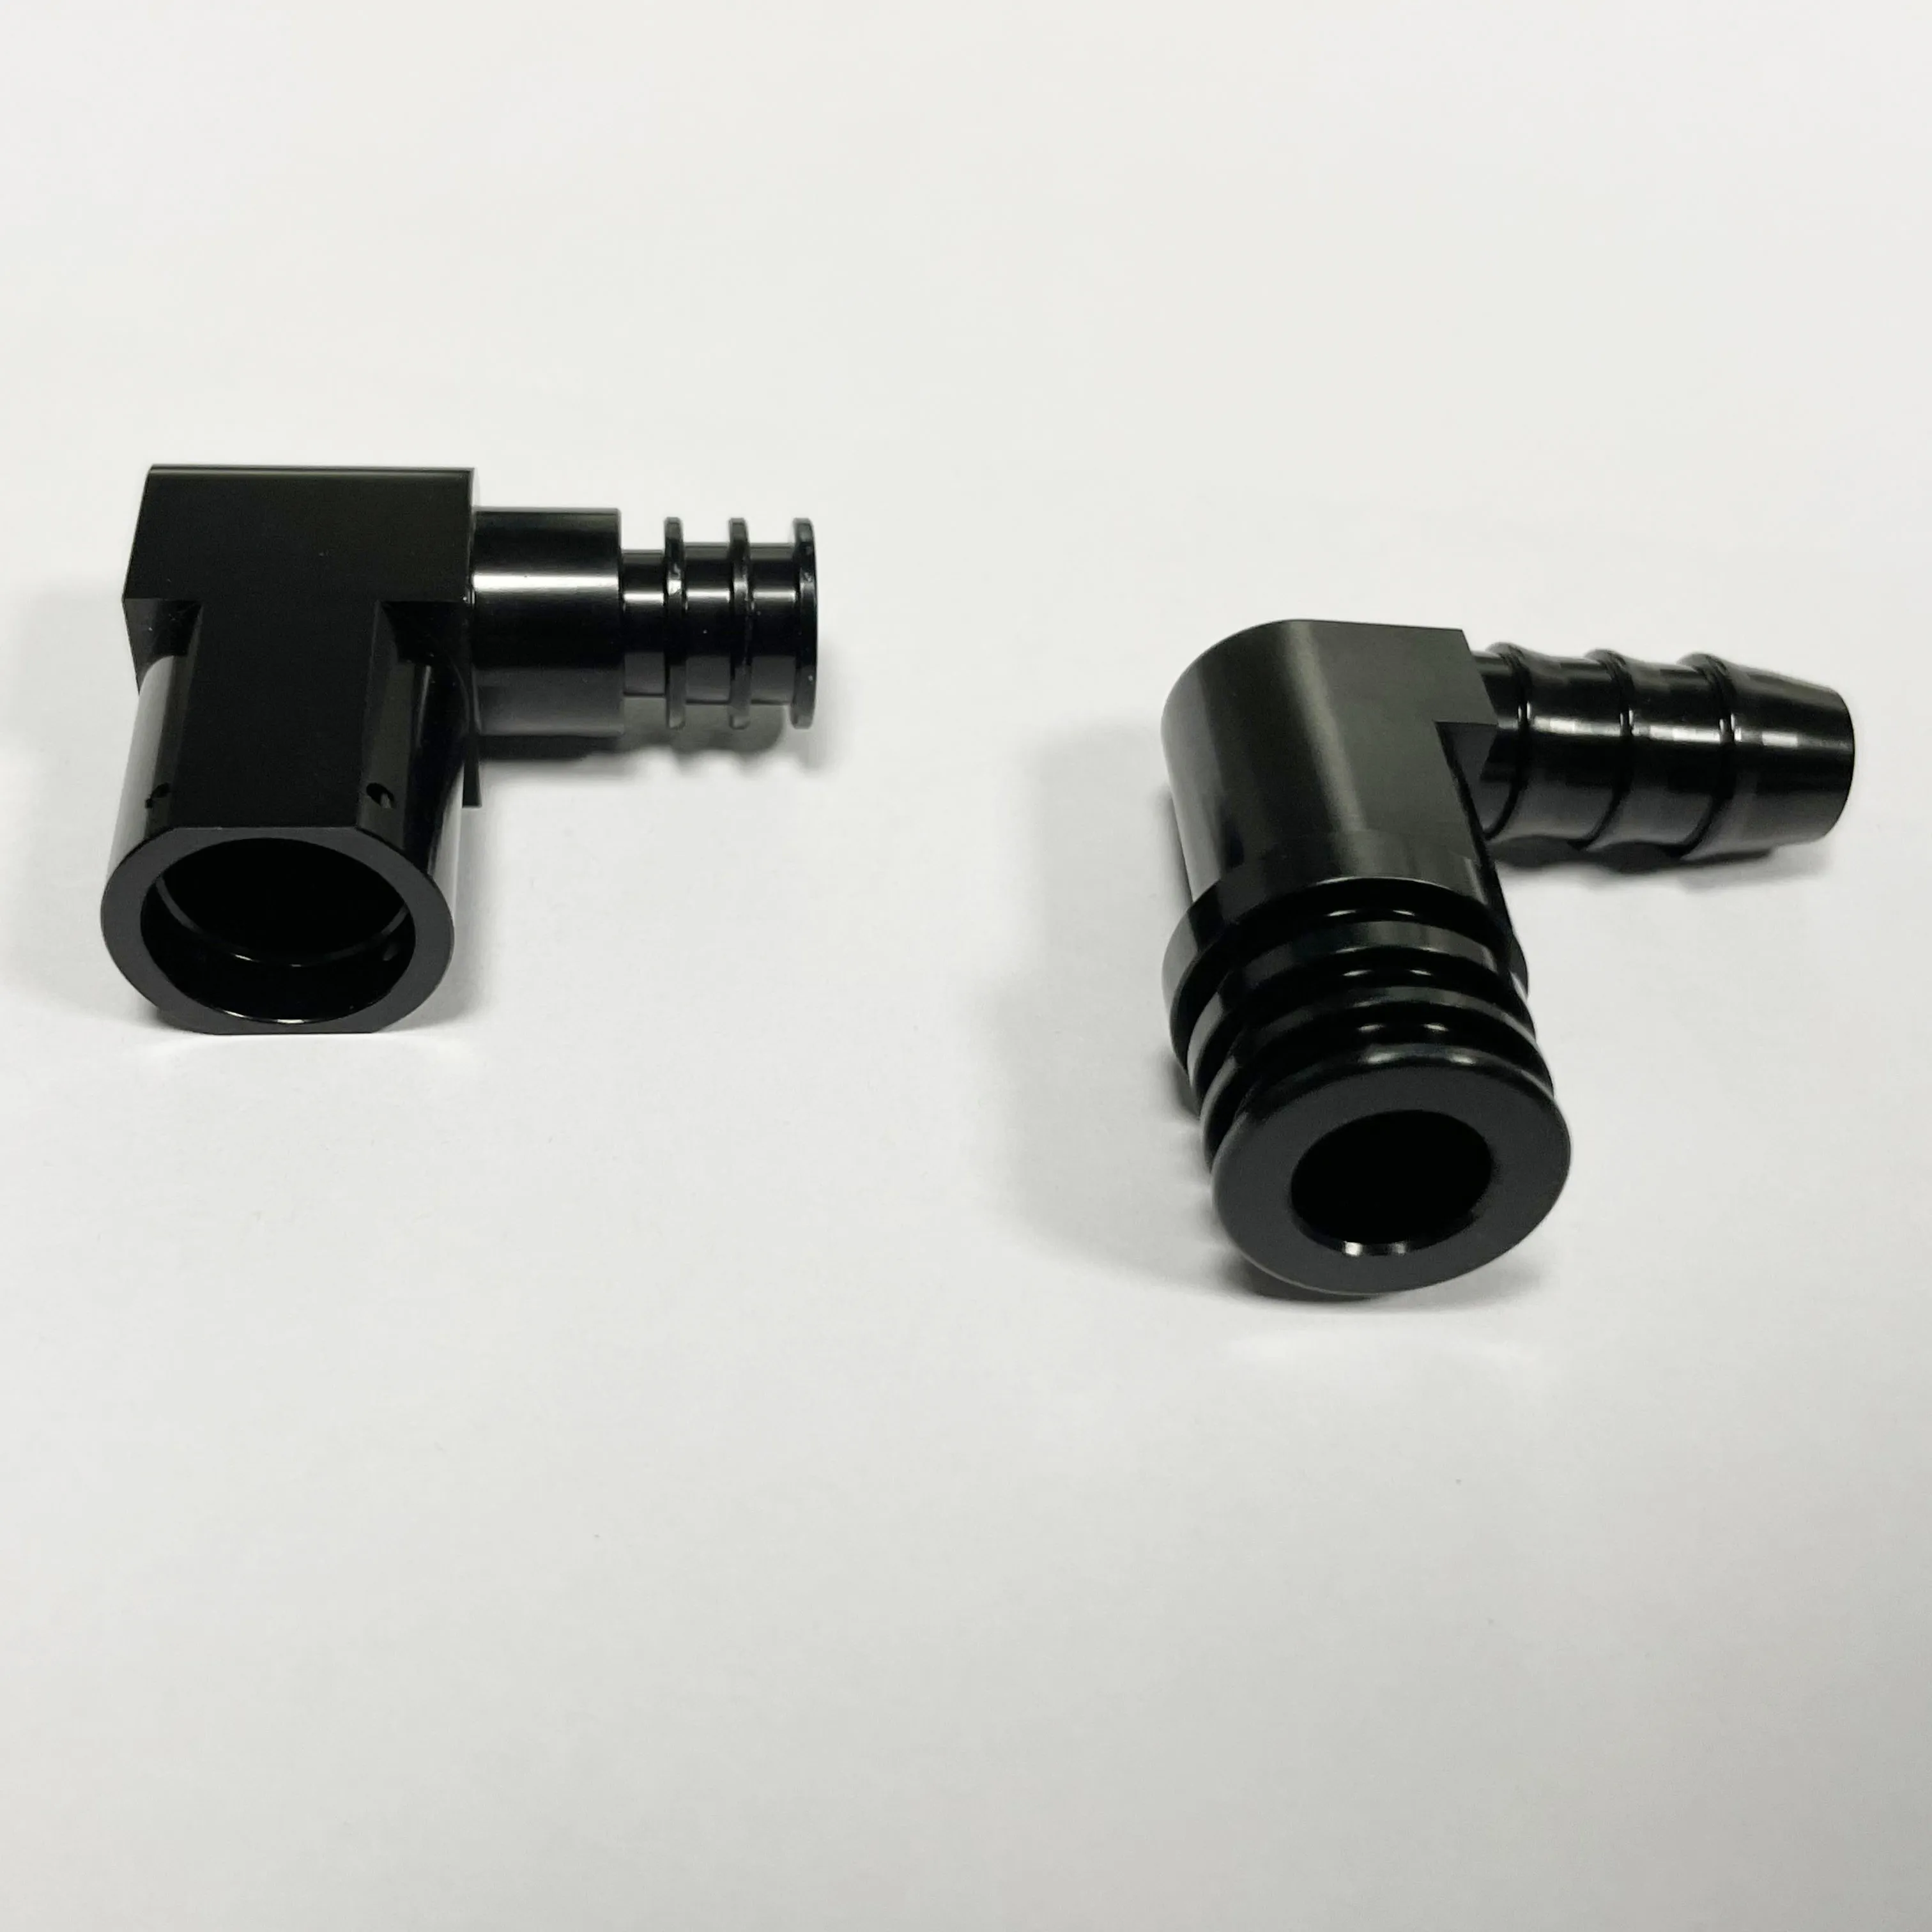 CNC-Bearbeitungs werkstatt kunden spezifisches Design Mini-Kolben Hydraulik pumpe Ersatzteile